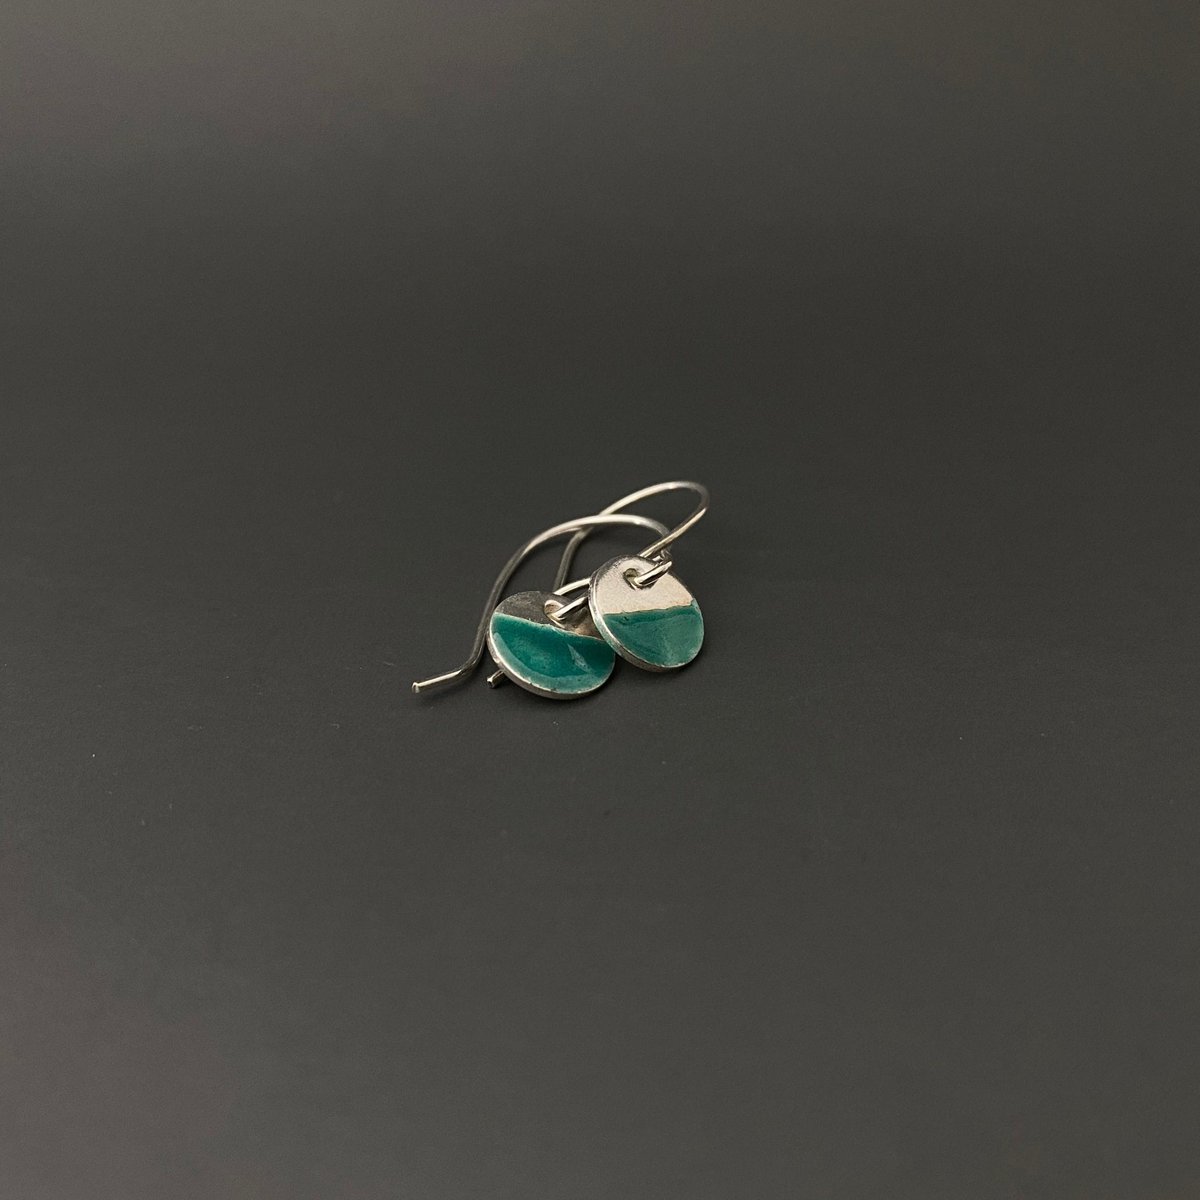 Two Tone Silver Disc Earrings - Small tuppu.net/a4318708 #inbizhour #MHHSBD #UKHashtags #giftideas ##UKGiftHour #shopsmall #HandmadeHour #bizbubble #SilverEarrings